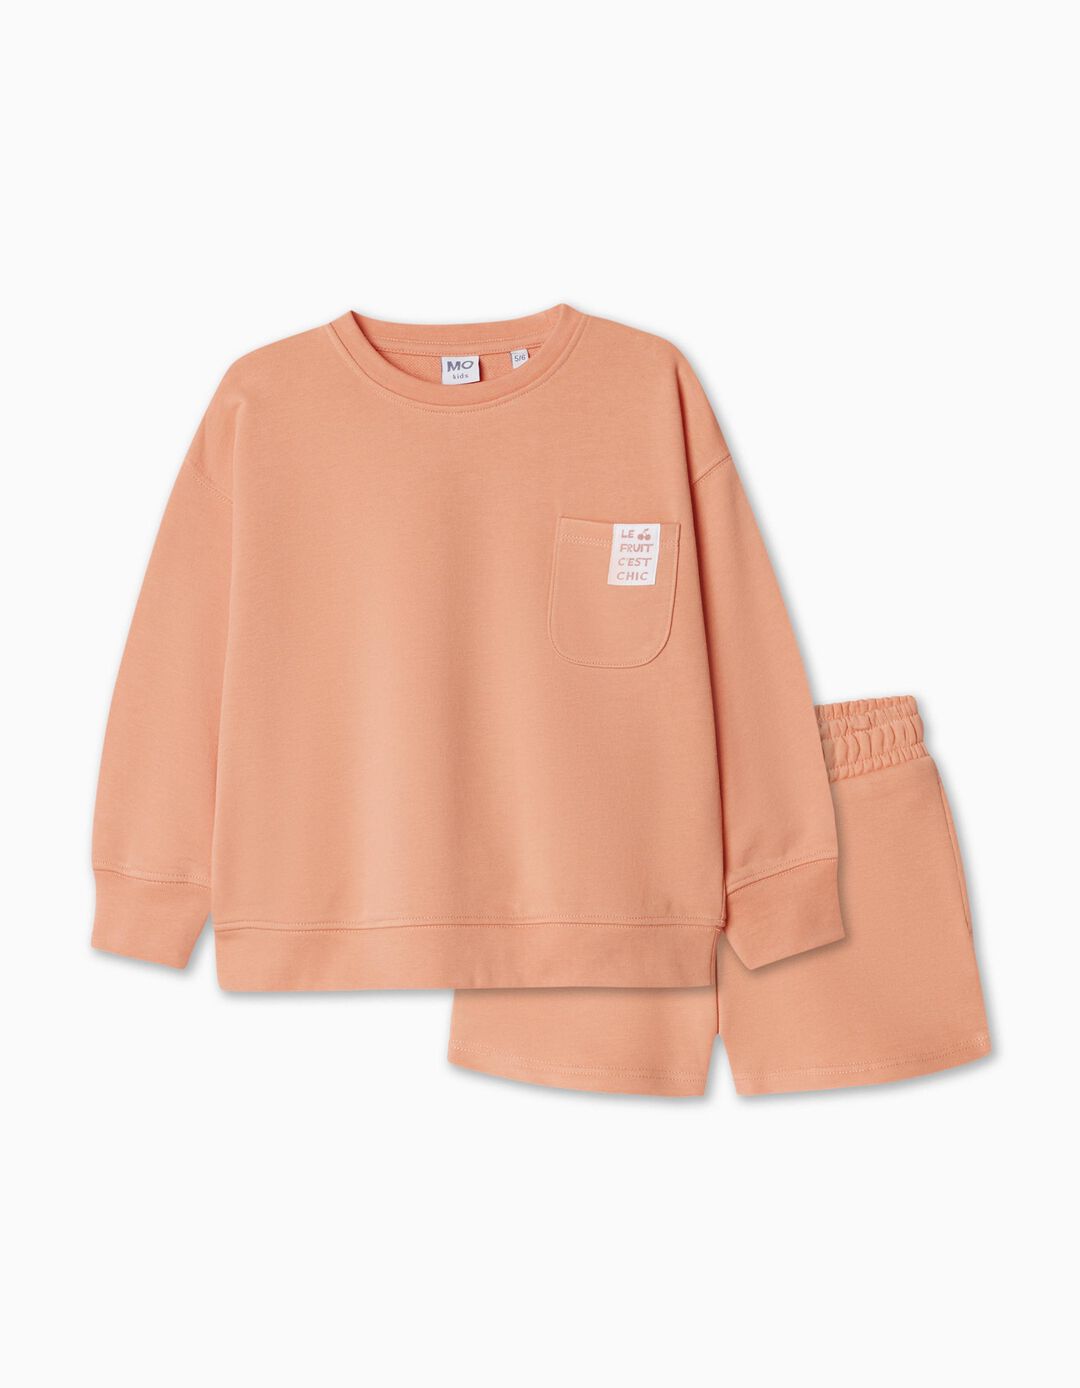 Shorts + Felpa Sweatshirt Set, Girls, Light Orange